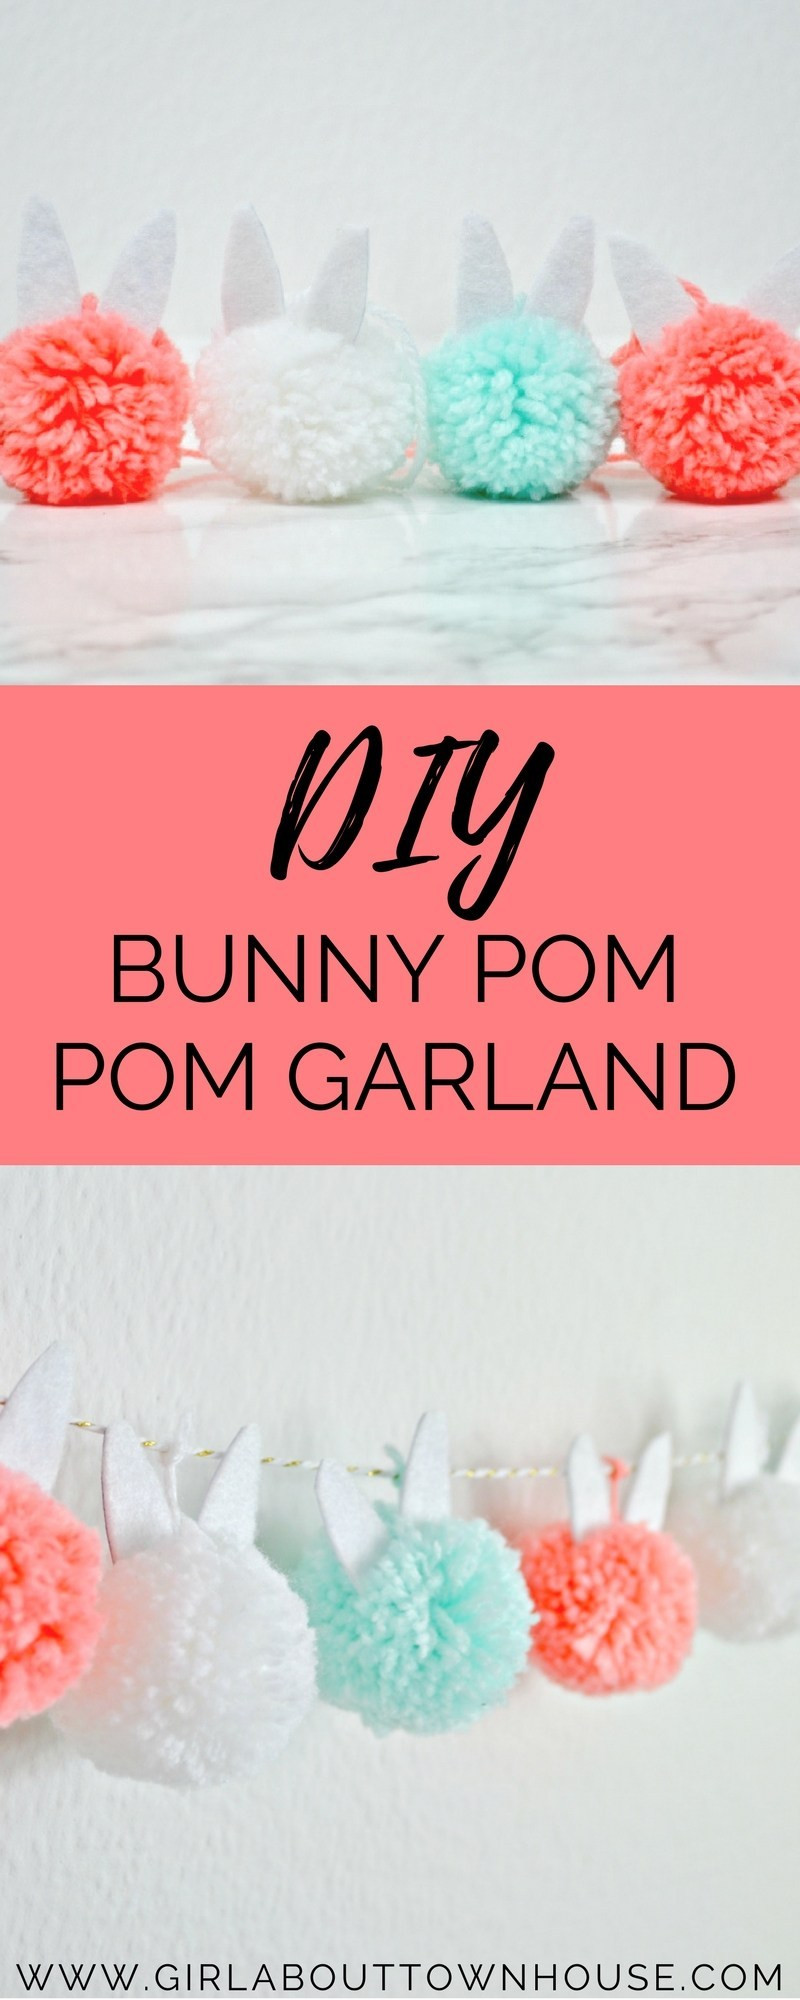 Best ideas about DIY Pom Pom Garland
. Save or Pin Bunny DIY Pom Pom Garland Tutorial Girl about townhouse Now.